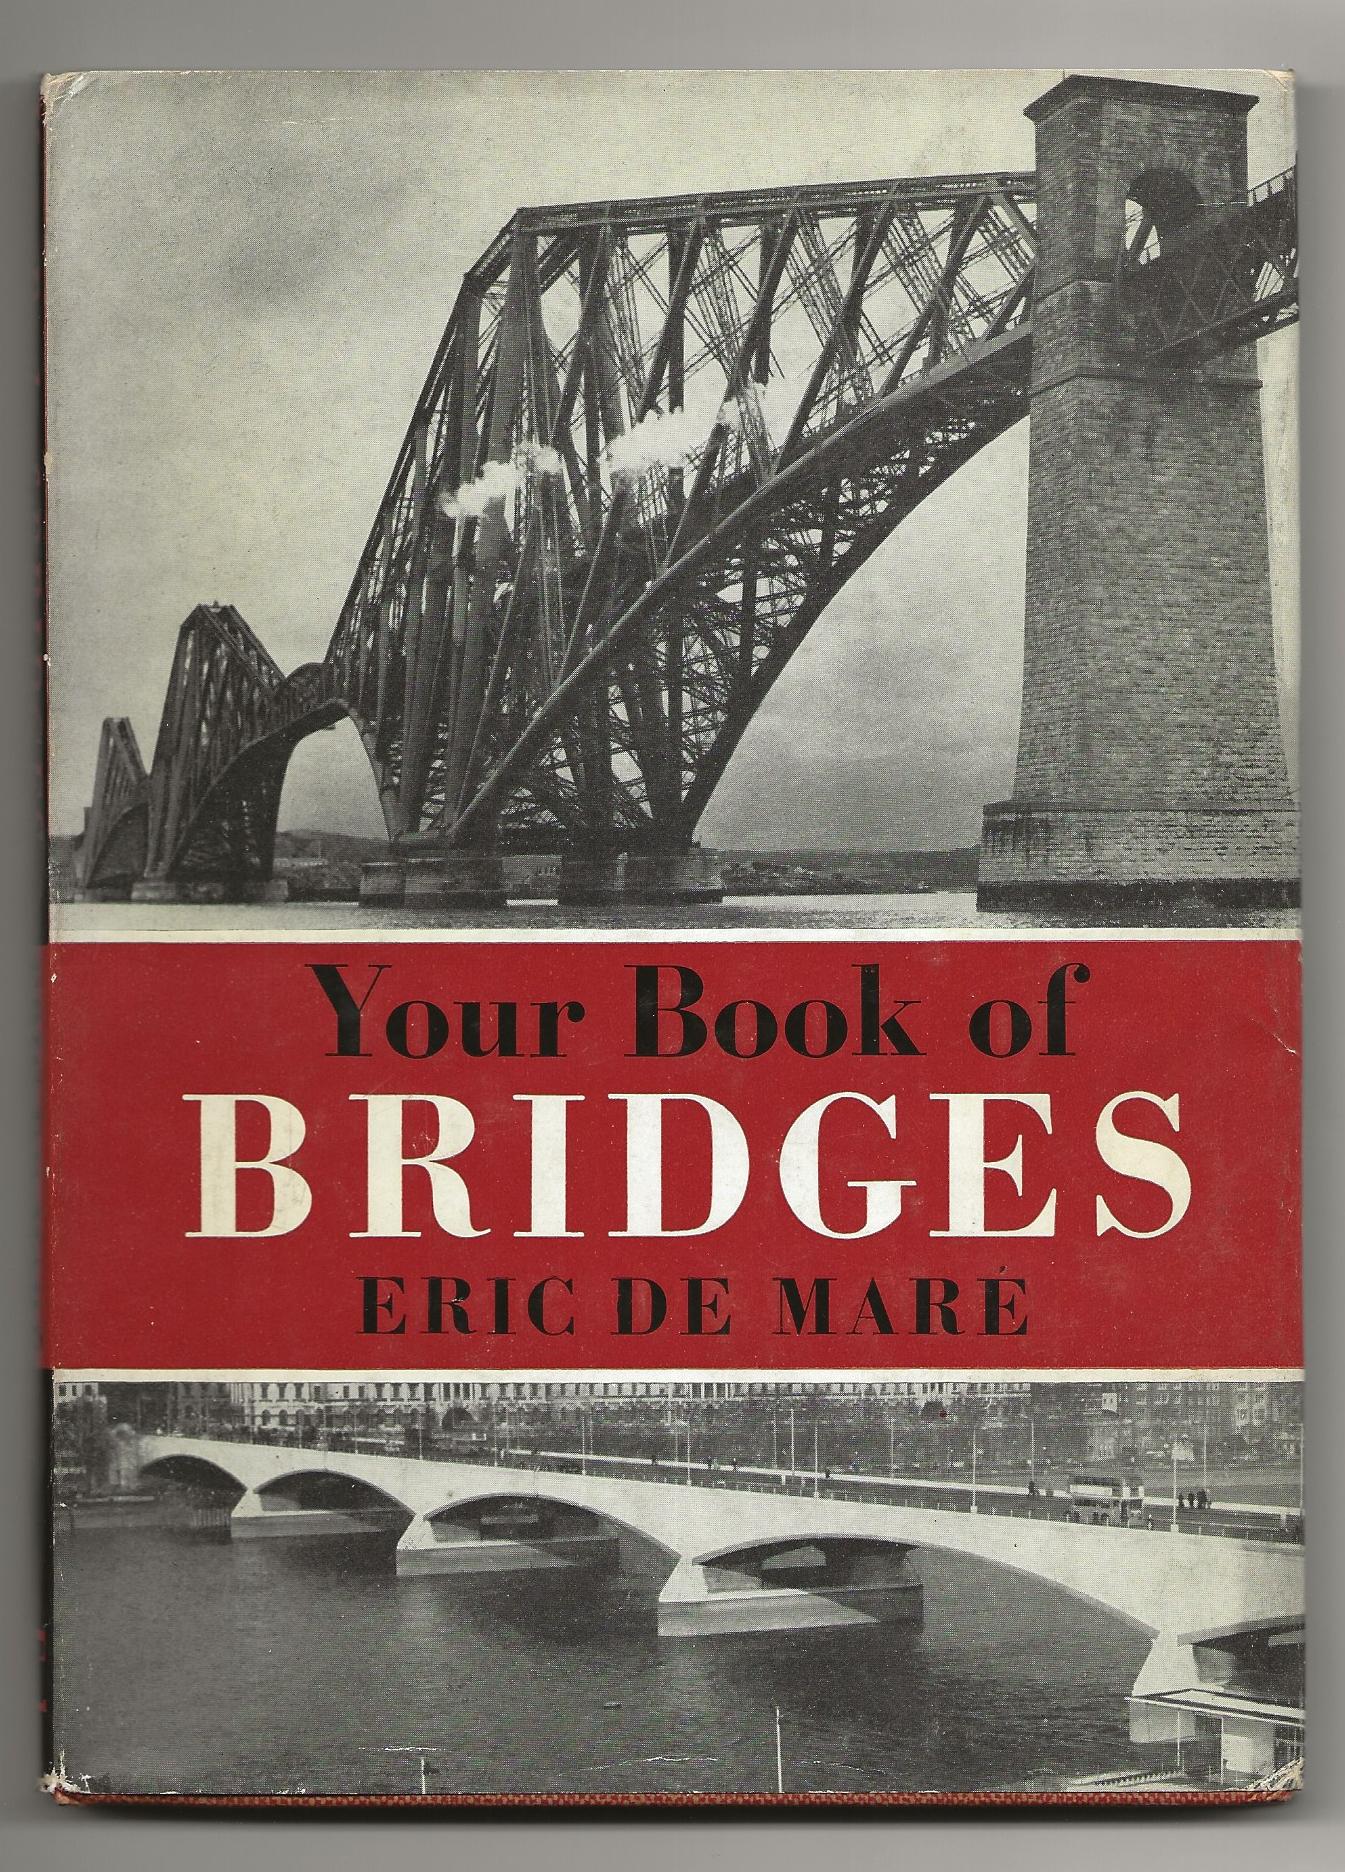 Your Book of Bridges